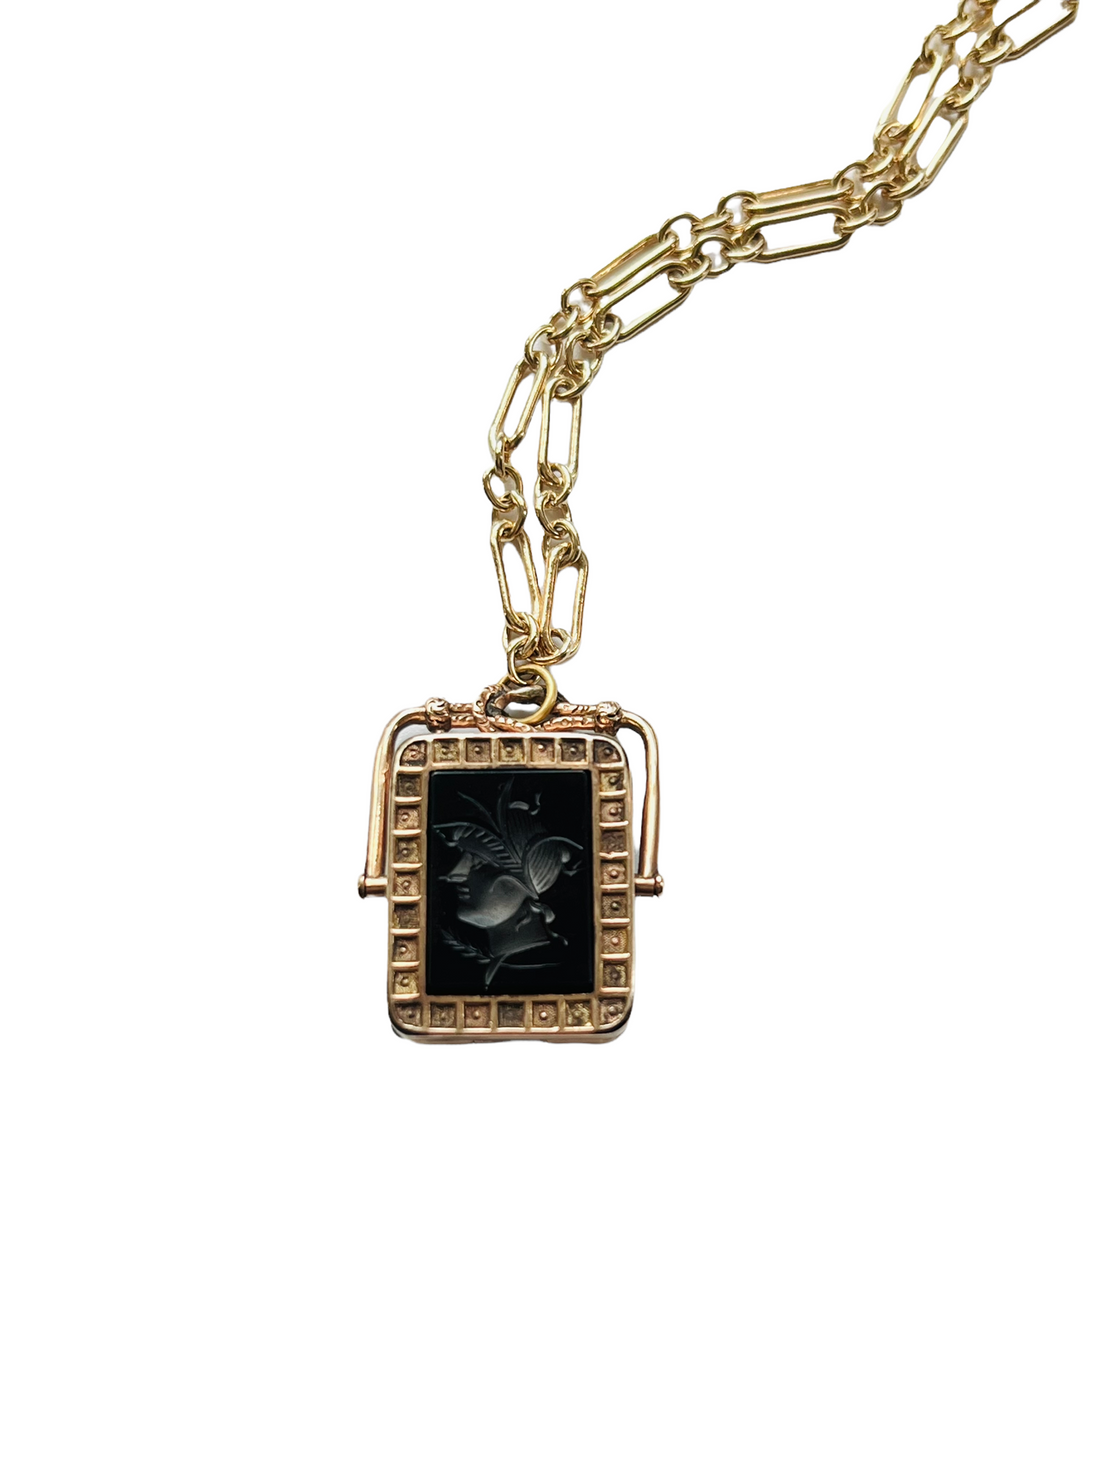 Antique Celluloid Intaglio Locket Necklace